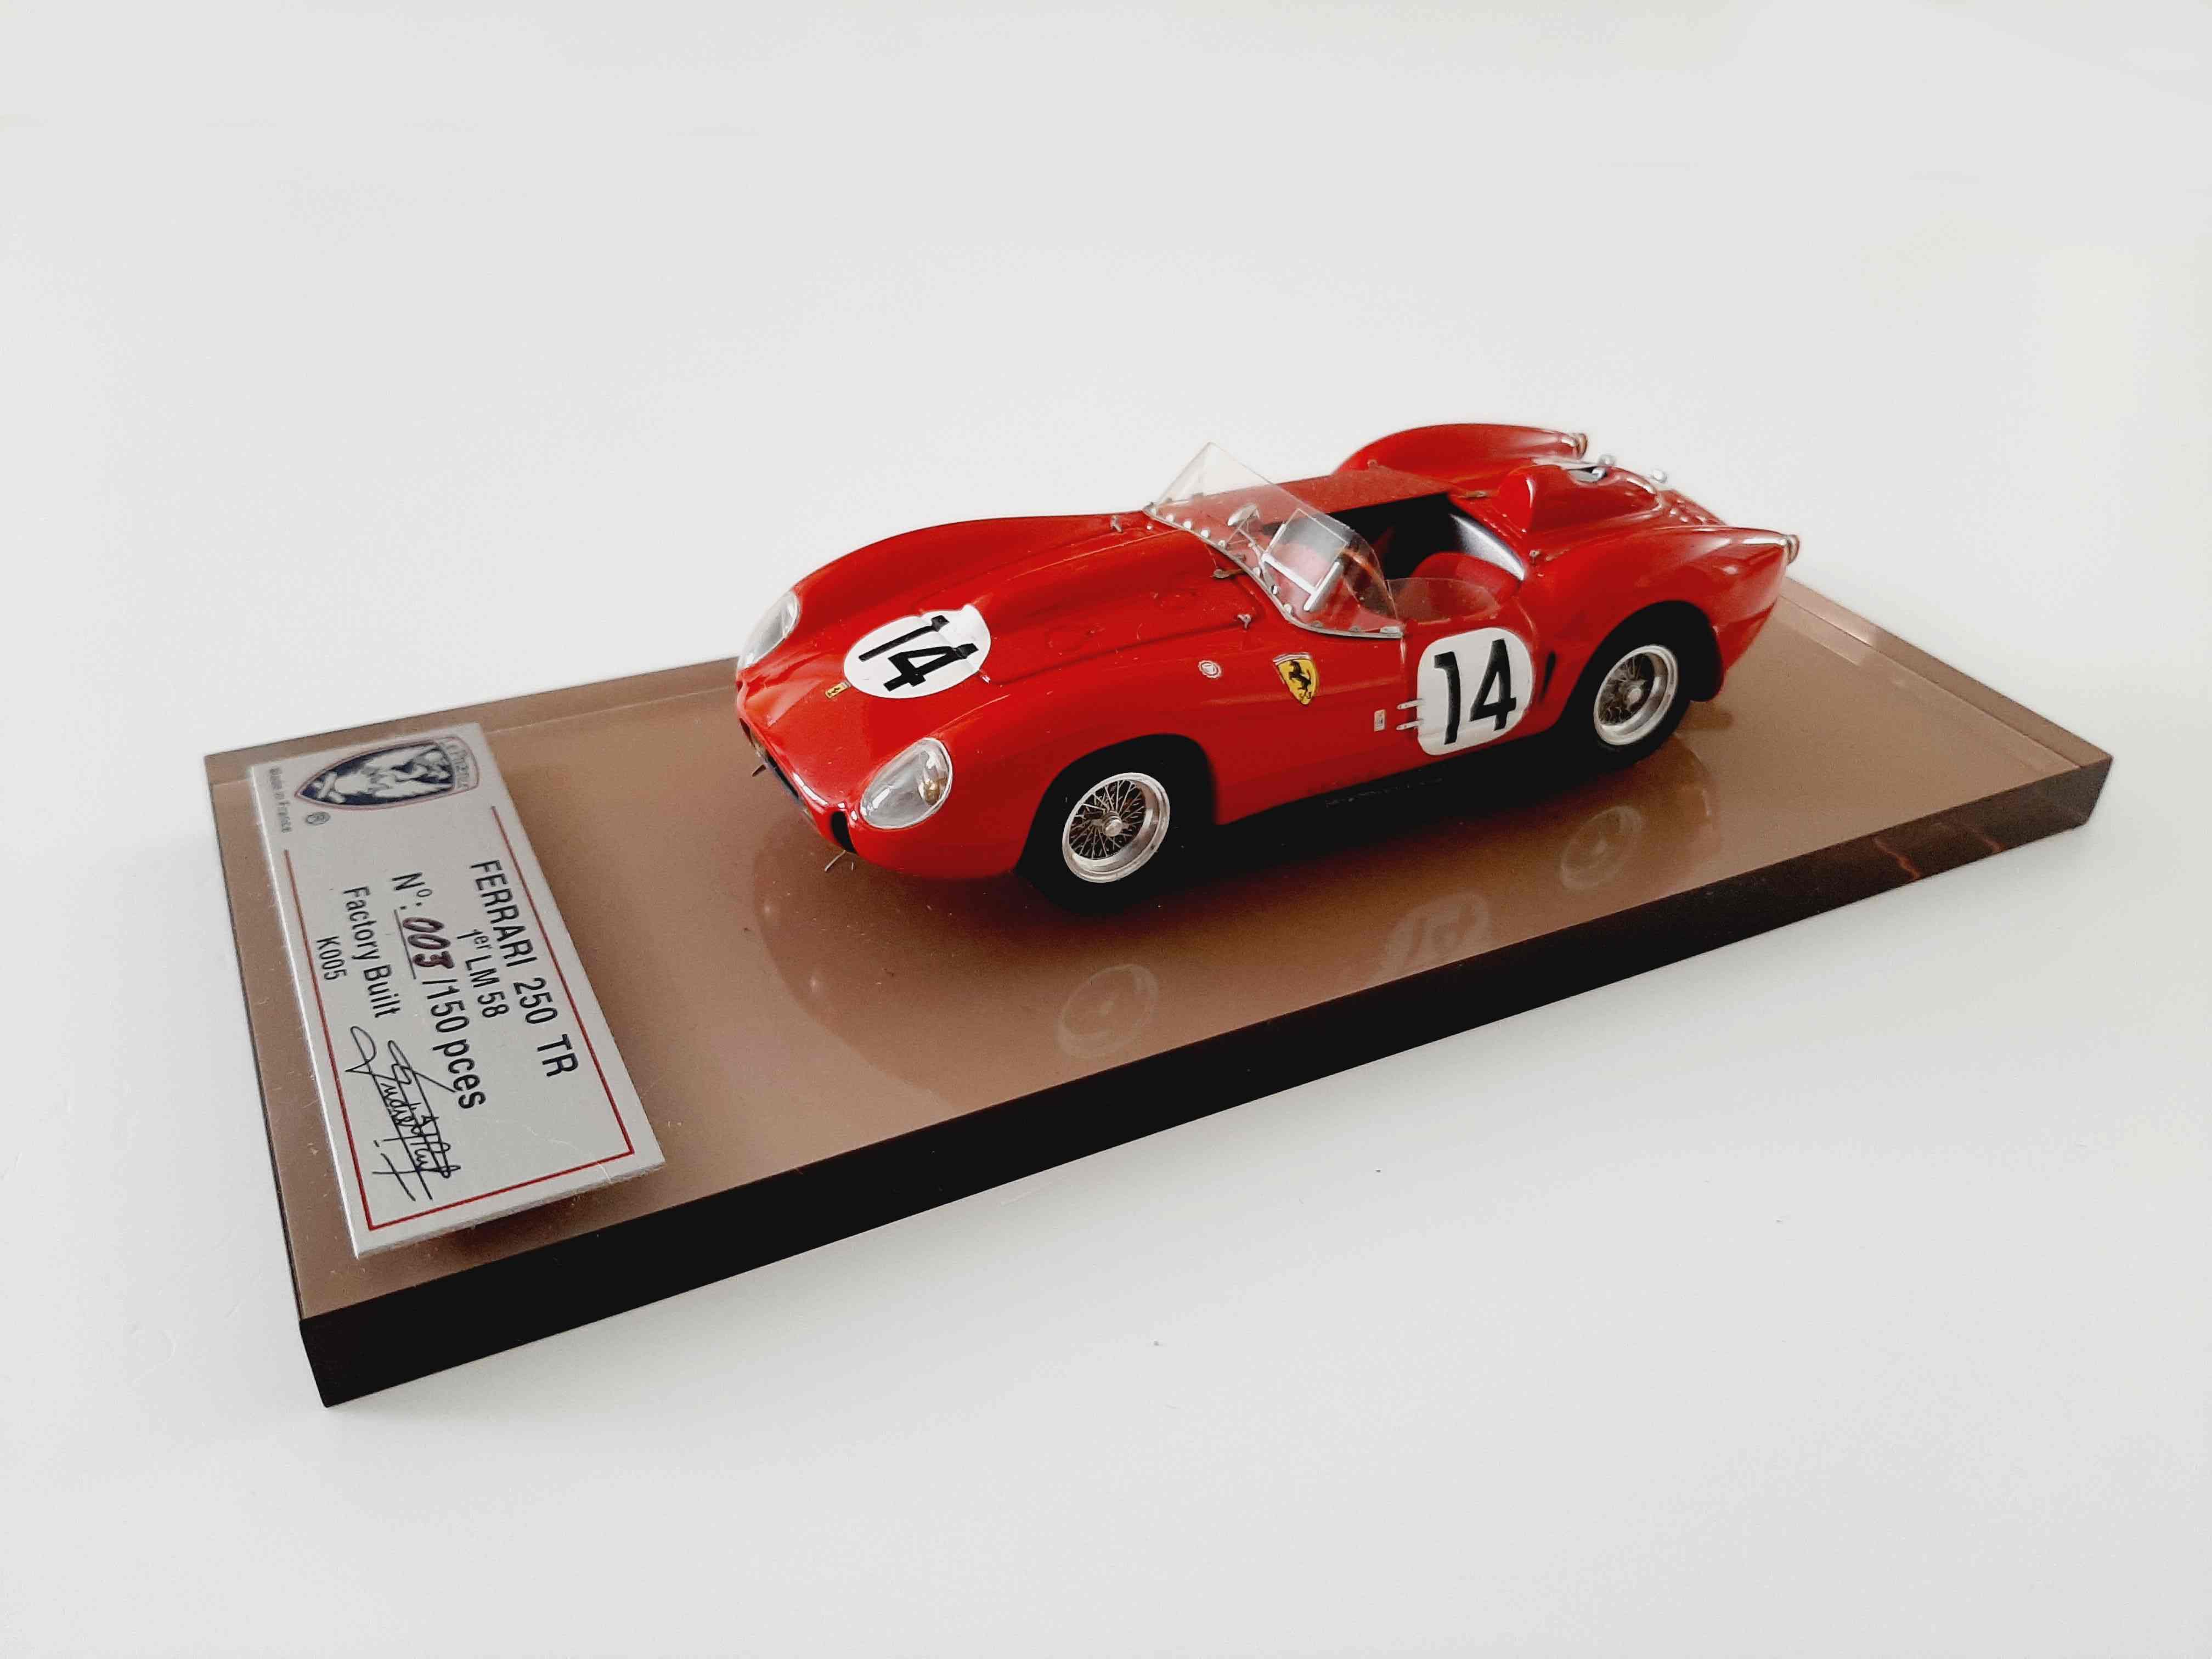 AM Ruf : Ferrari 250 TR 58 winner Le Mans 1958 --> SOLD